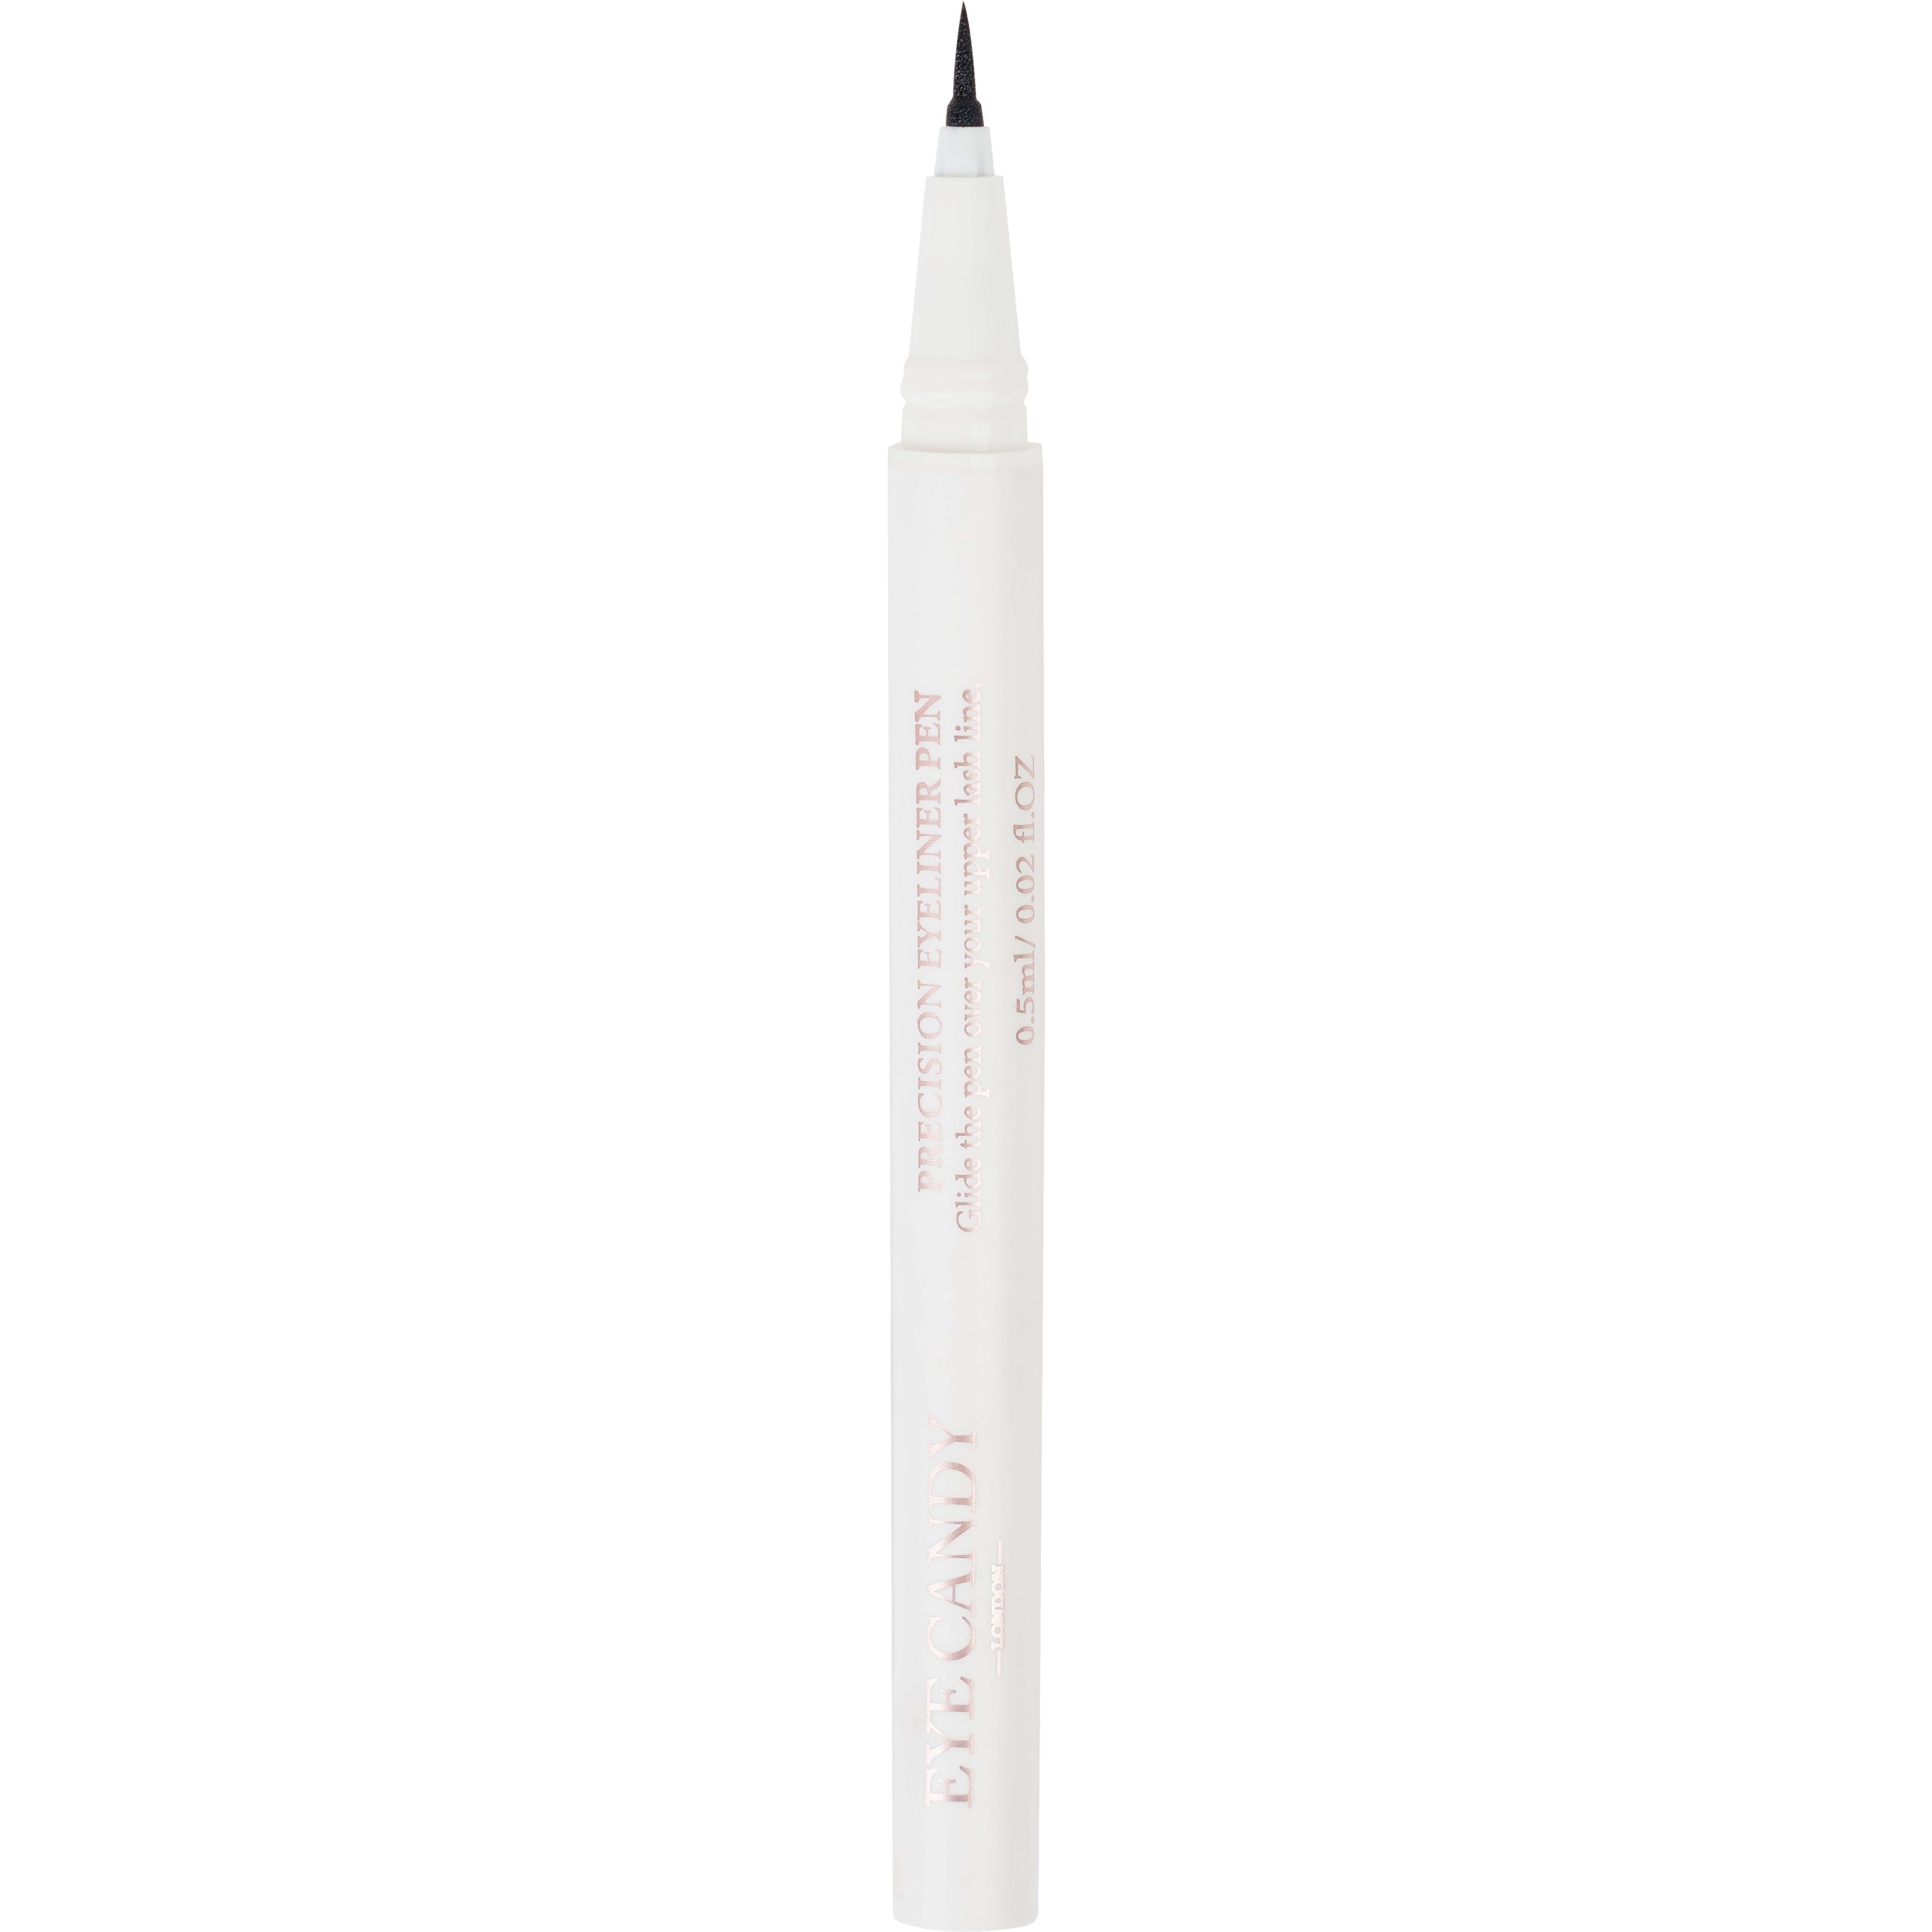 Eye Candy Precision Eyeliner Pen